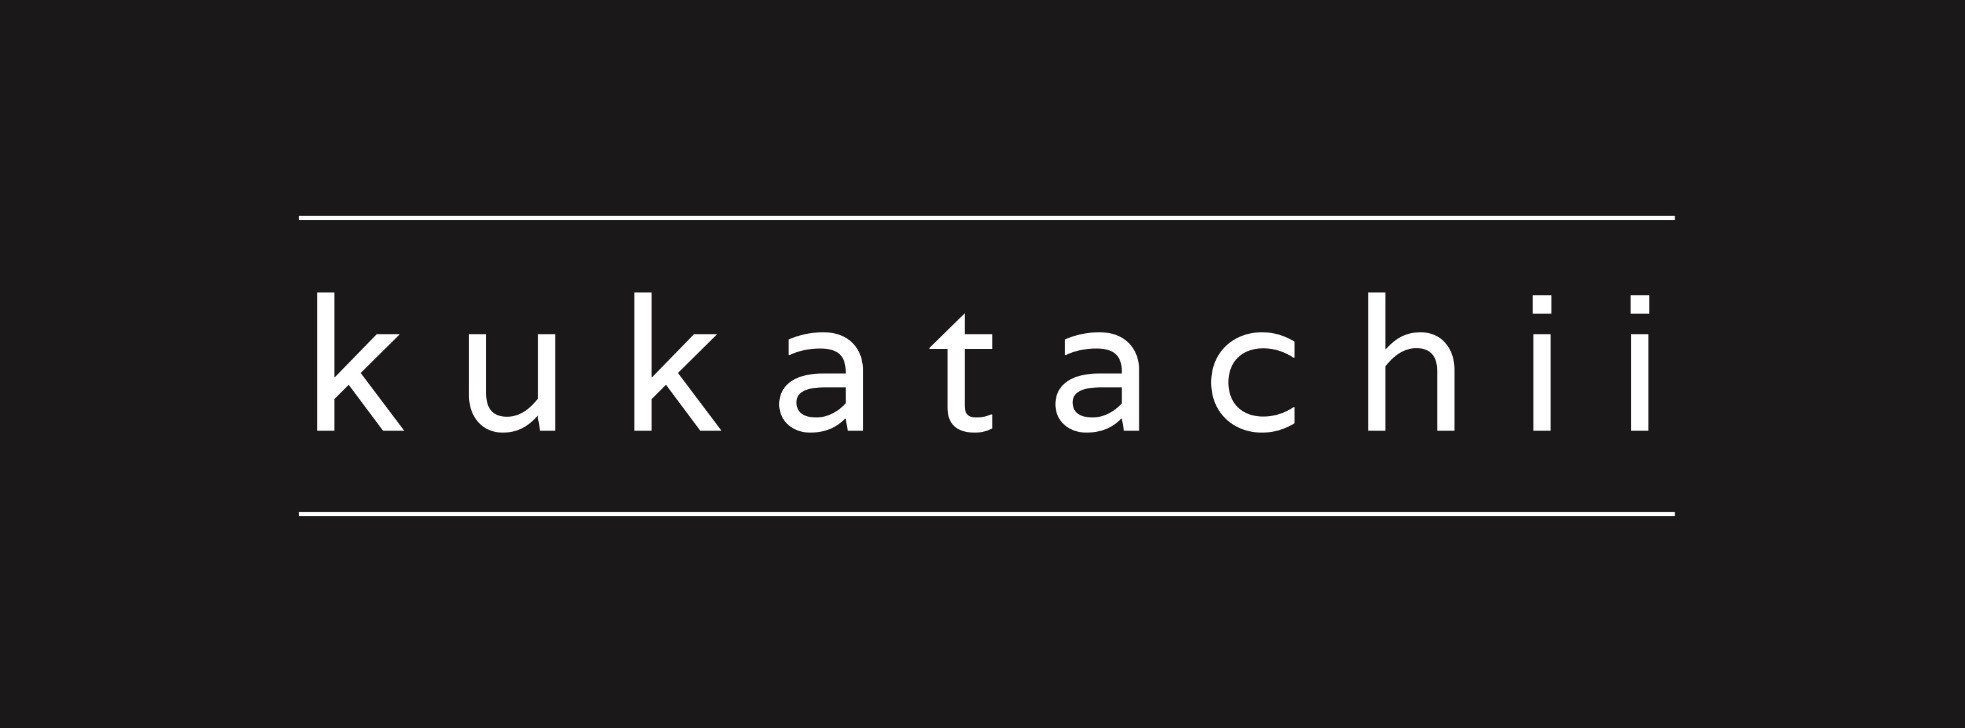 kukatachii online shop